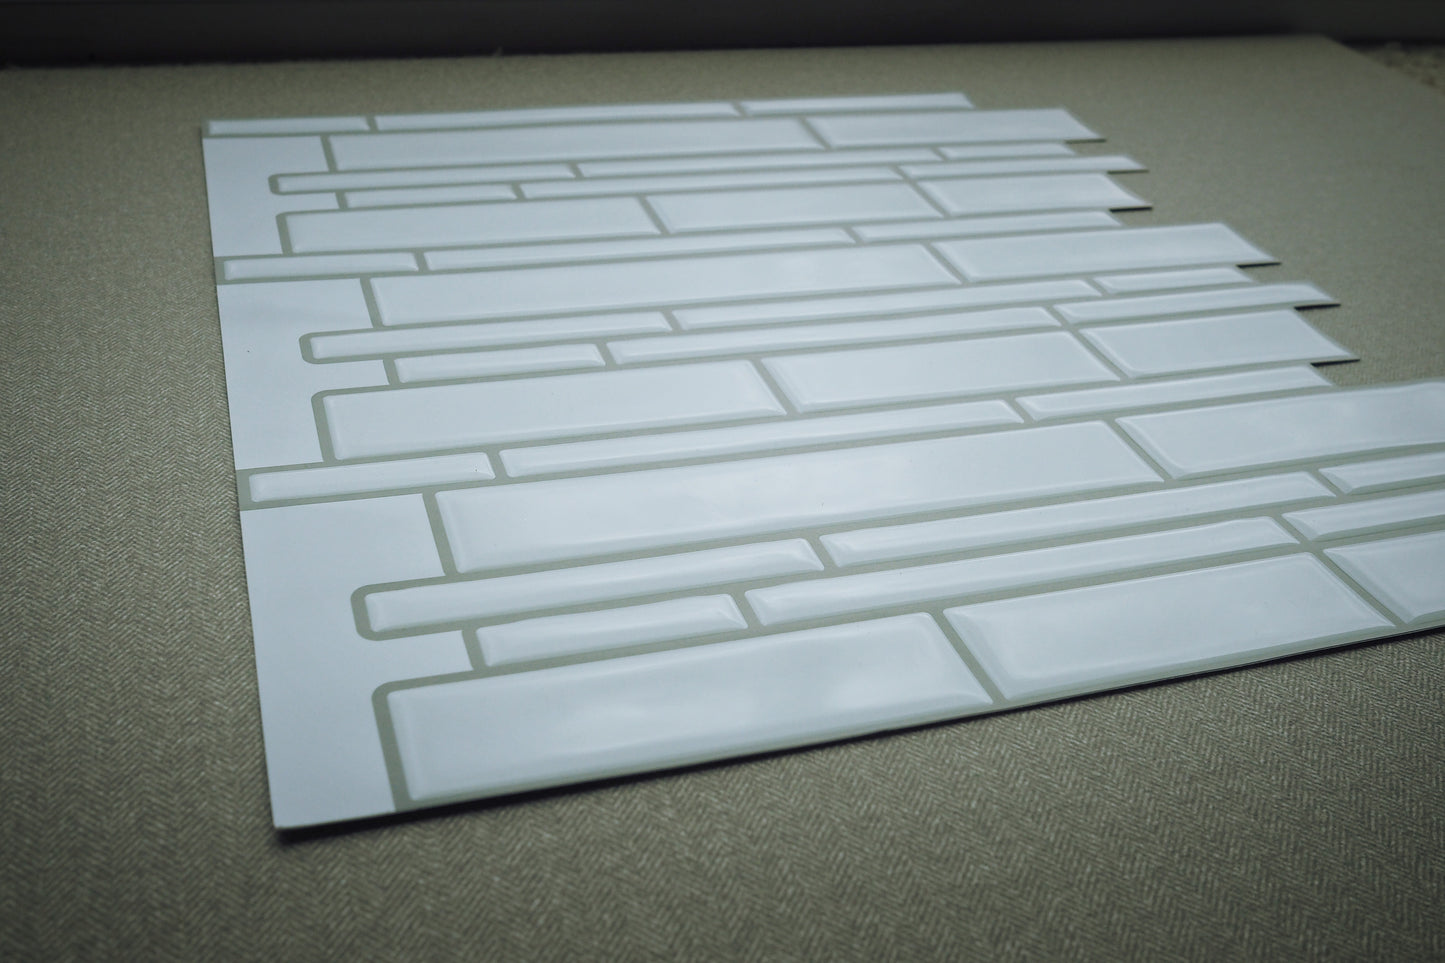 Decopus Flex Tile Peel and Stick Backsplash Vinyl (Longstrip - Mono White Ceramic10pc/Pack) for Kitchen, Bathroom, Wall Accents Flex Tile Stick On